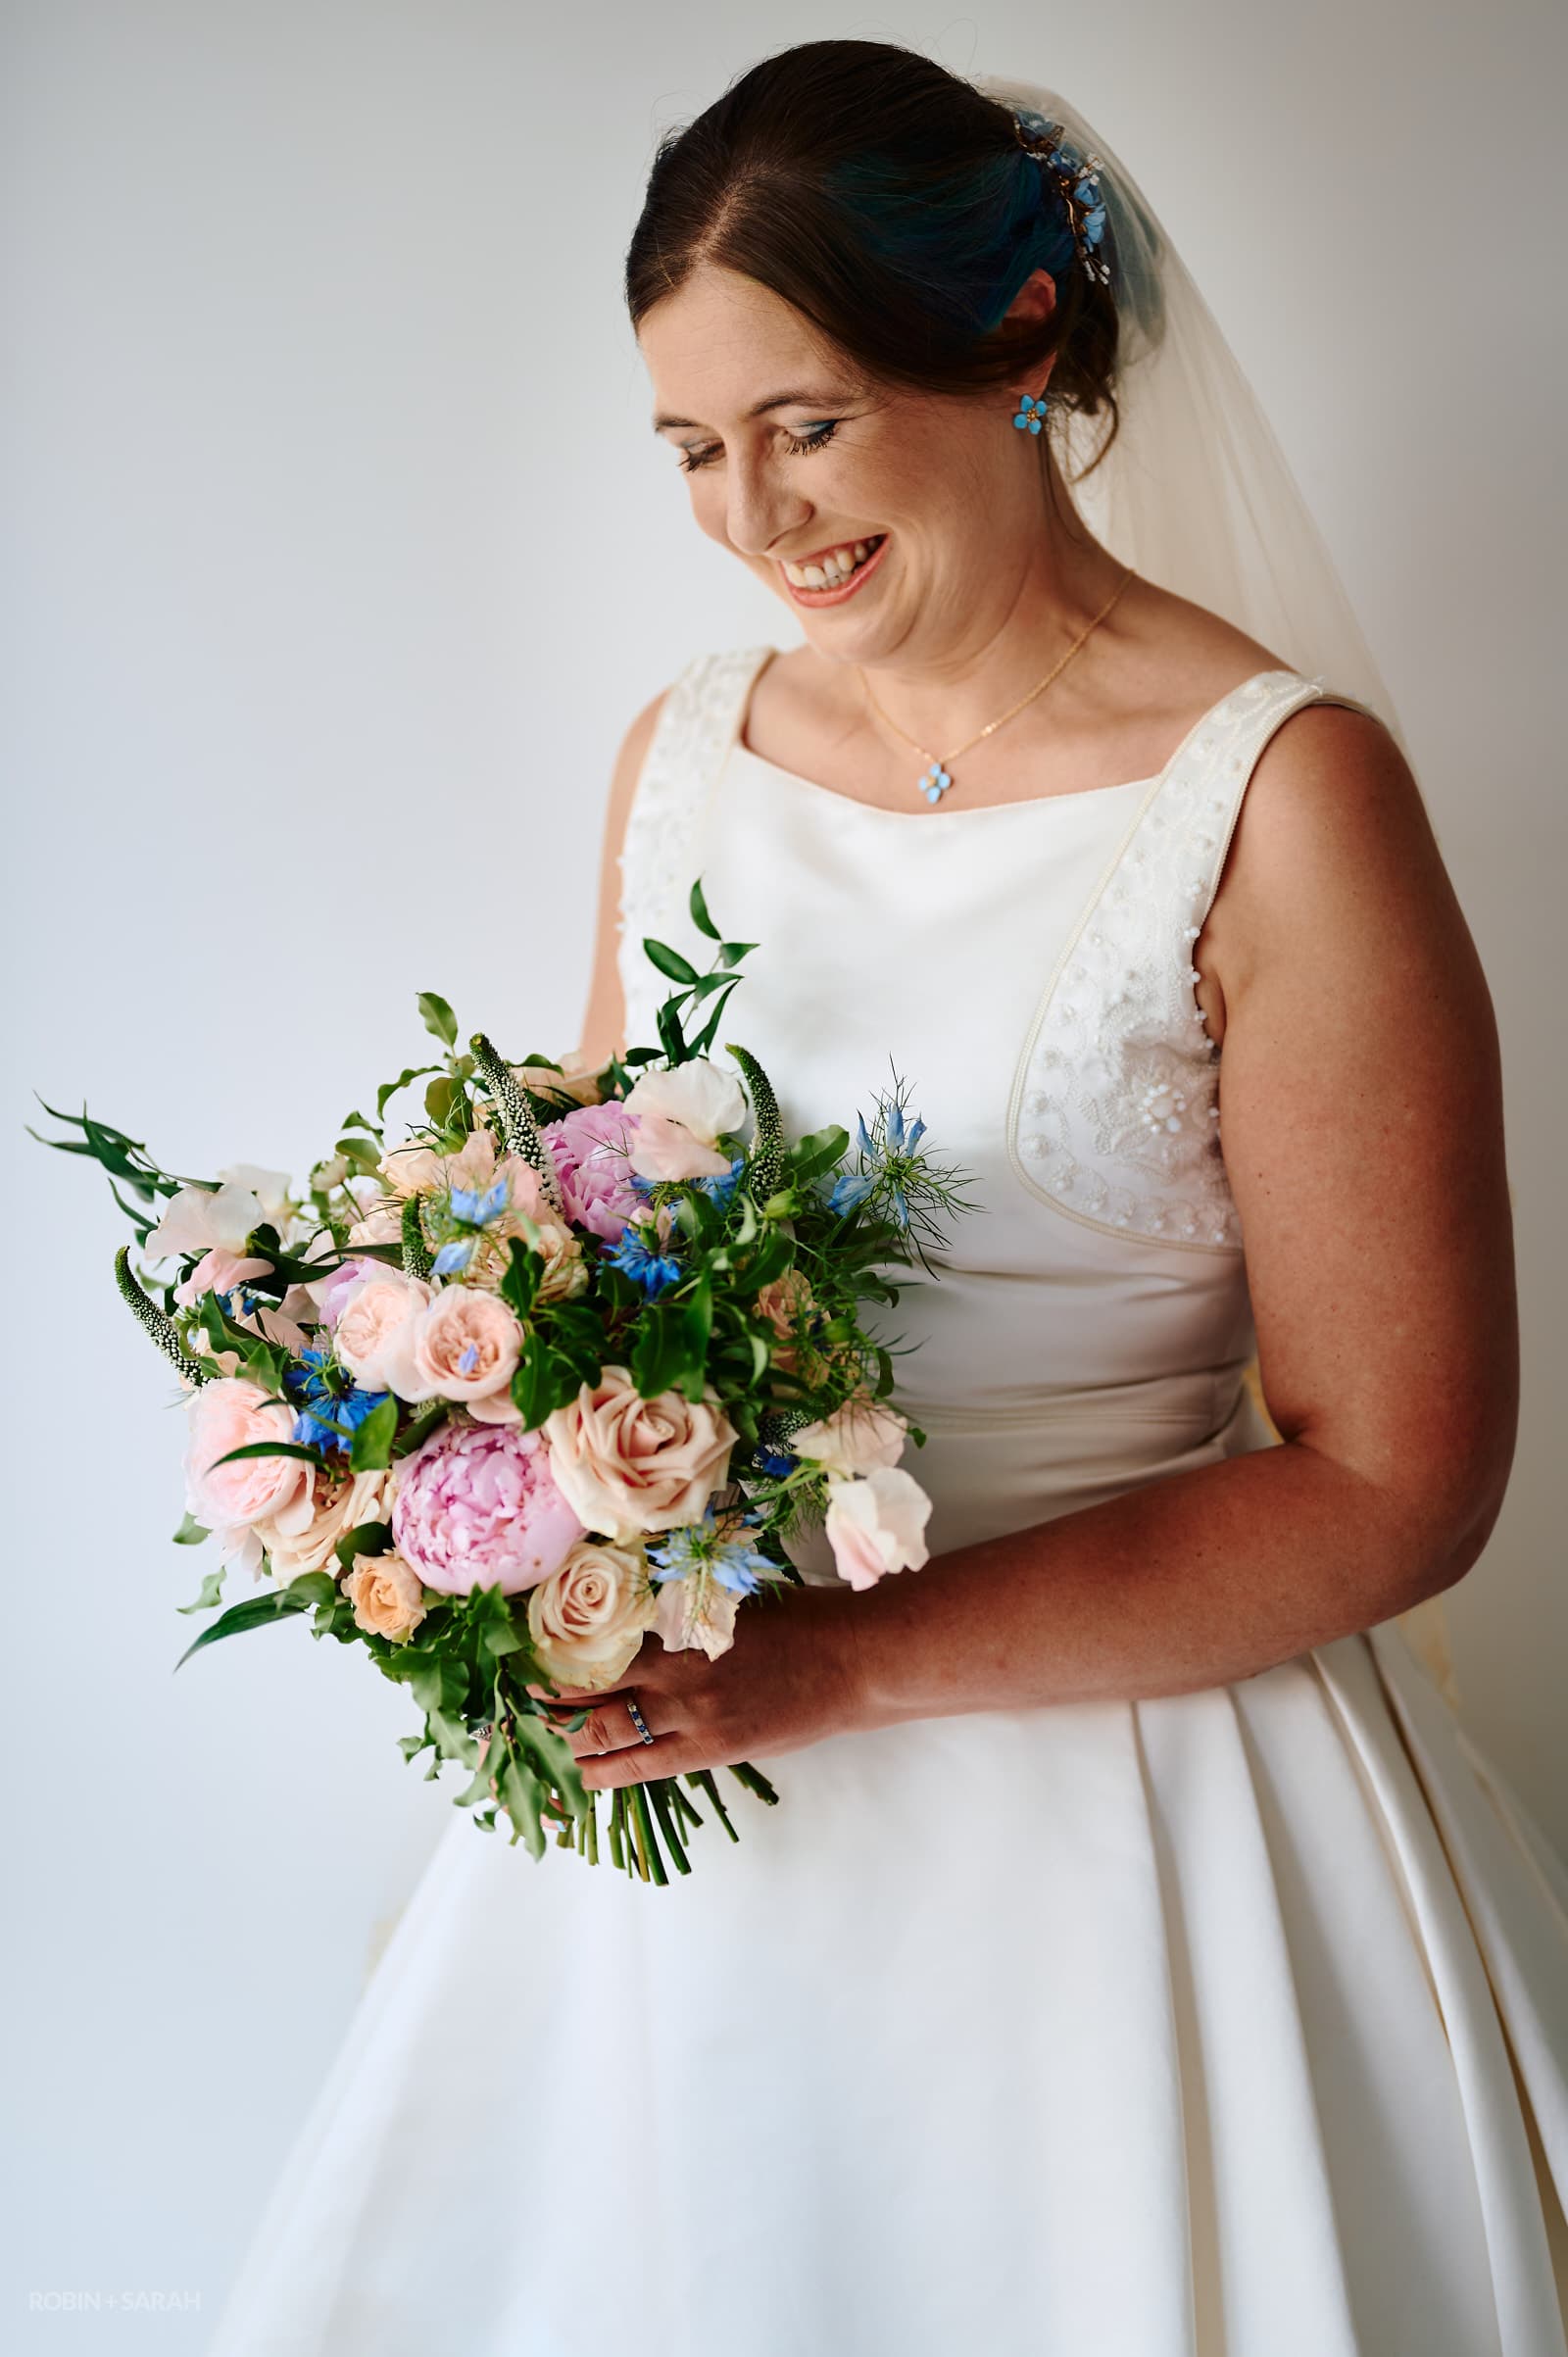 Portrait of bride holding a beautiful bouquet of flowers.